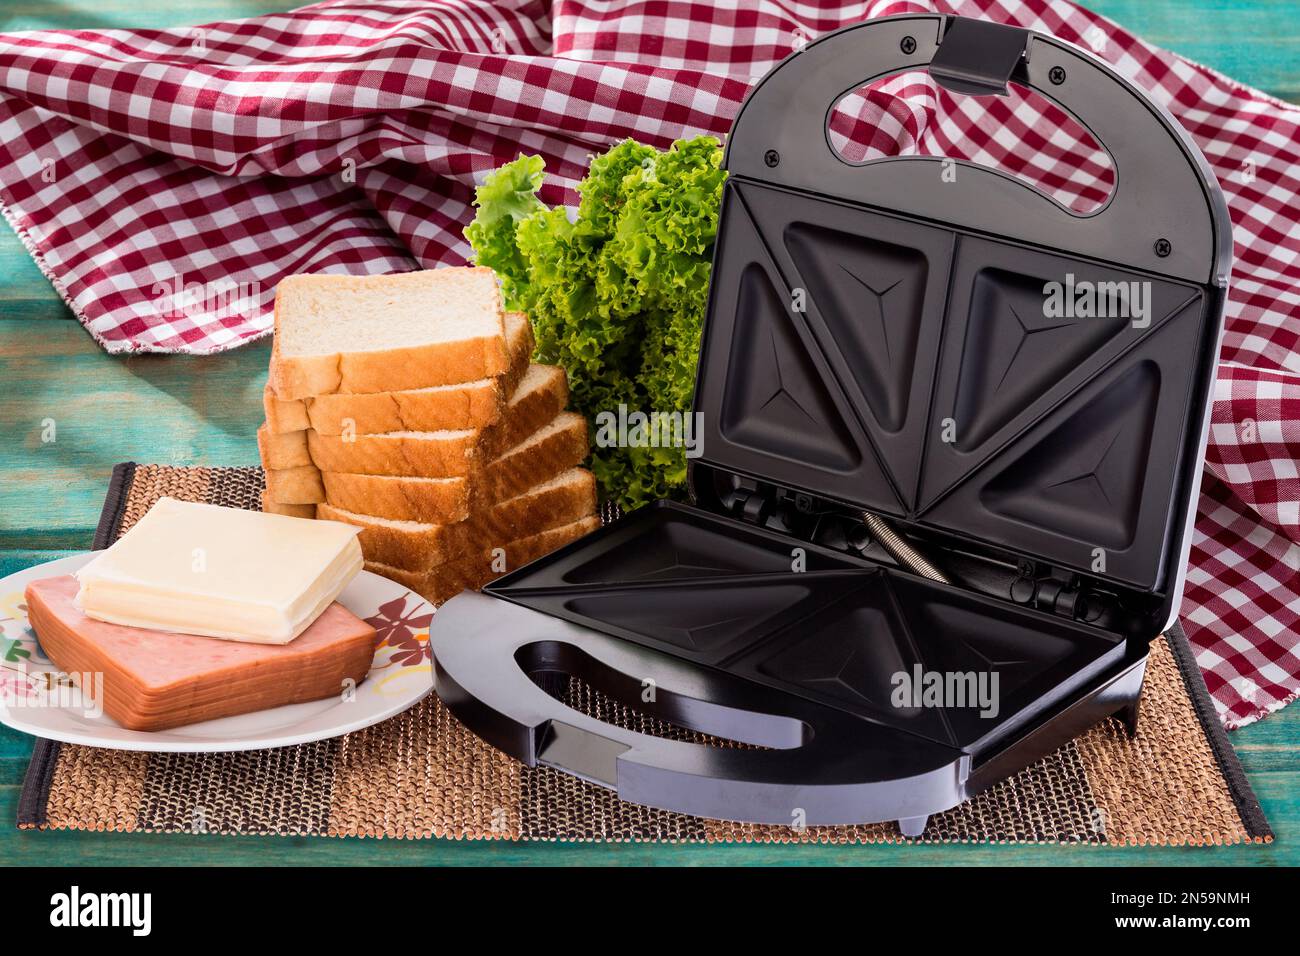 https://c8.alamy.com/comp/2N59NMH/black-sandwich-maker-photo-on-wooden-background-2N59NMH.jpg